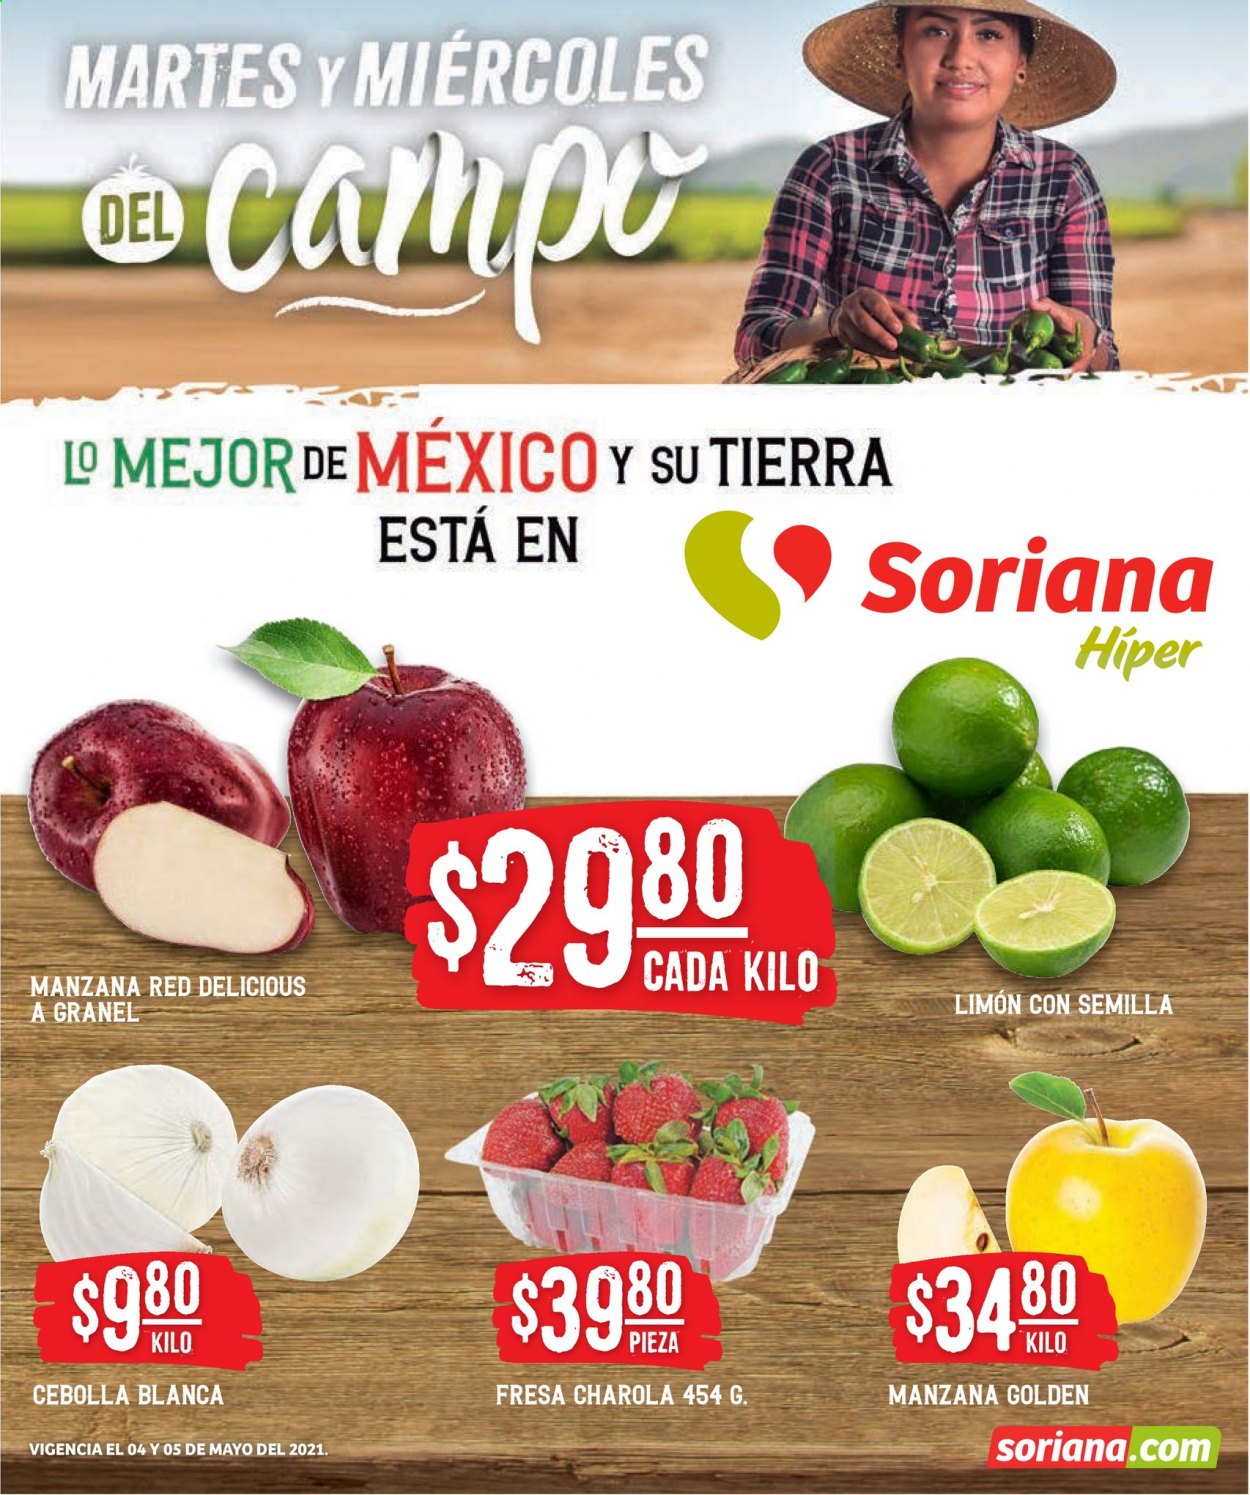 thumbnail - Folleto actual Soriana Híper - 4.5.2021 - 5.5.2021 - Ventas - fresa, manzanas, cebolla. Página 1.